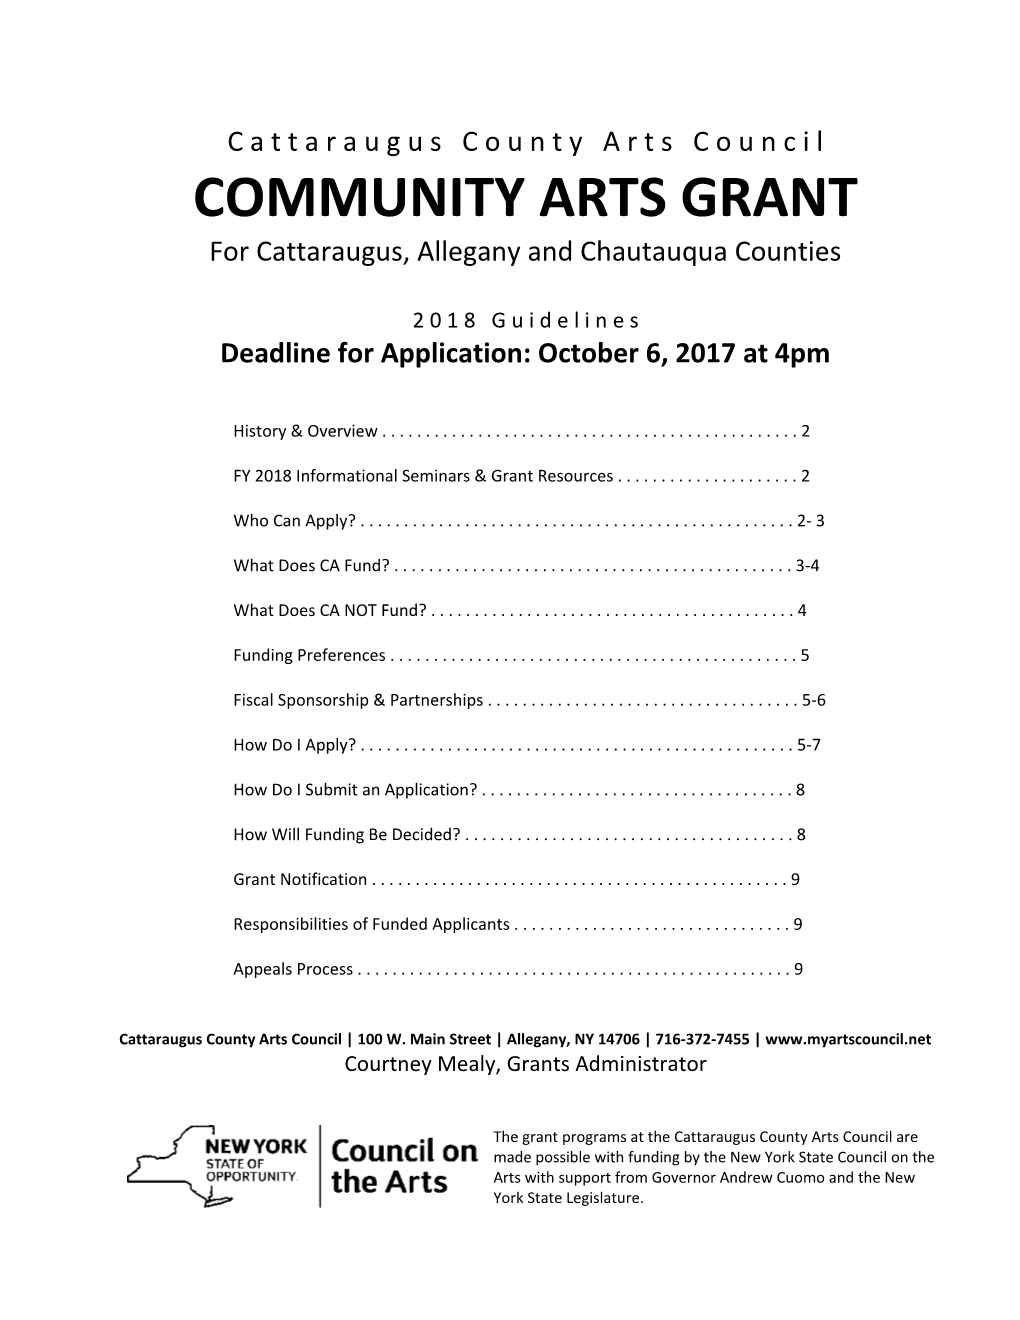 Community Arts Grant